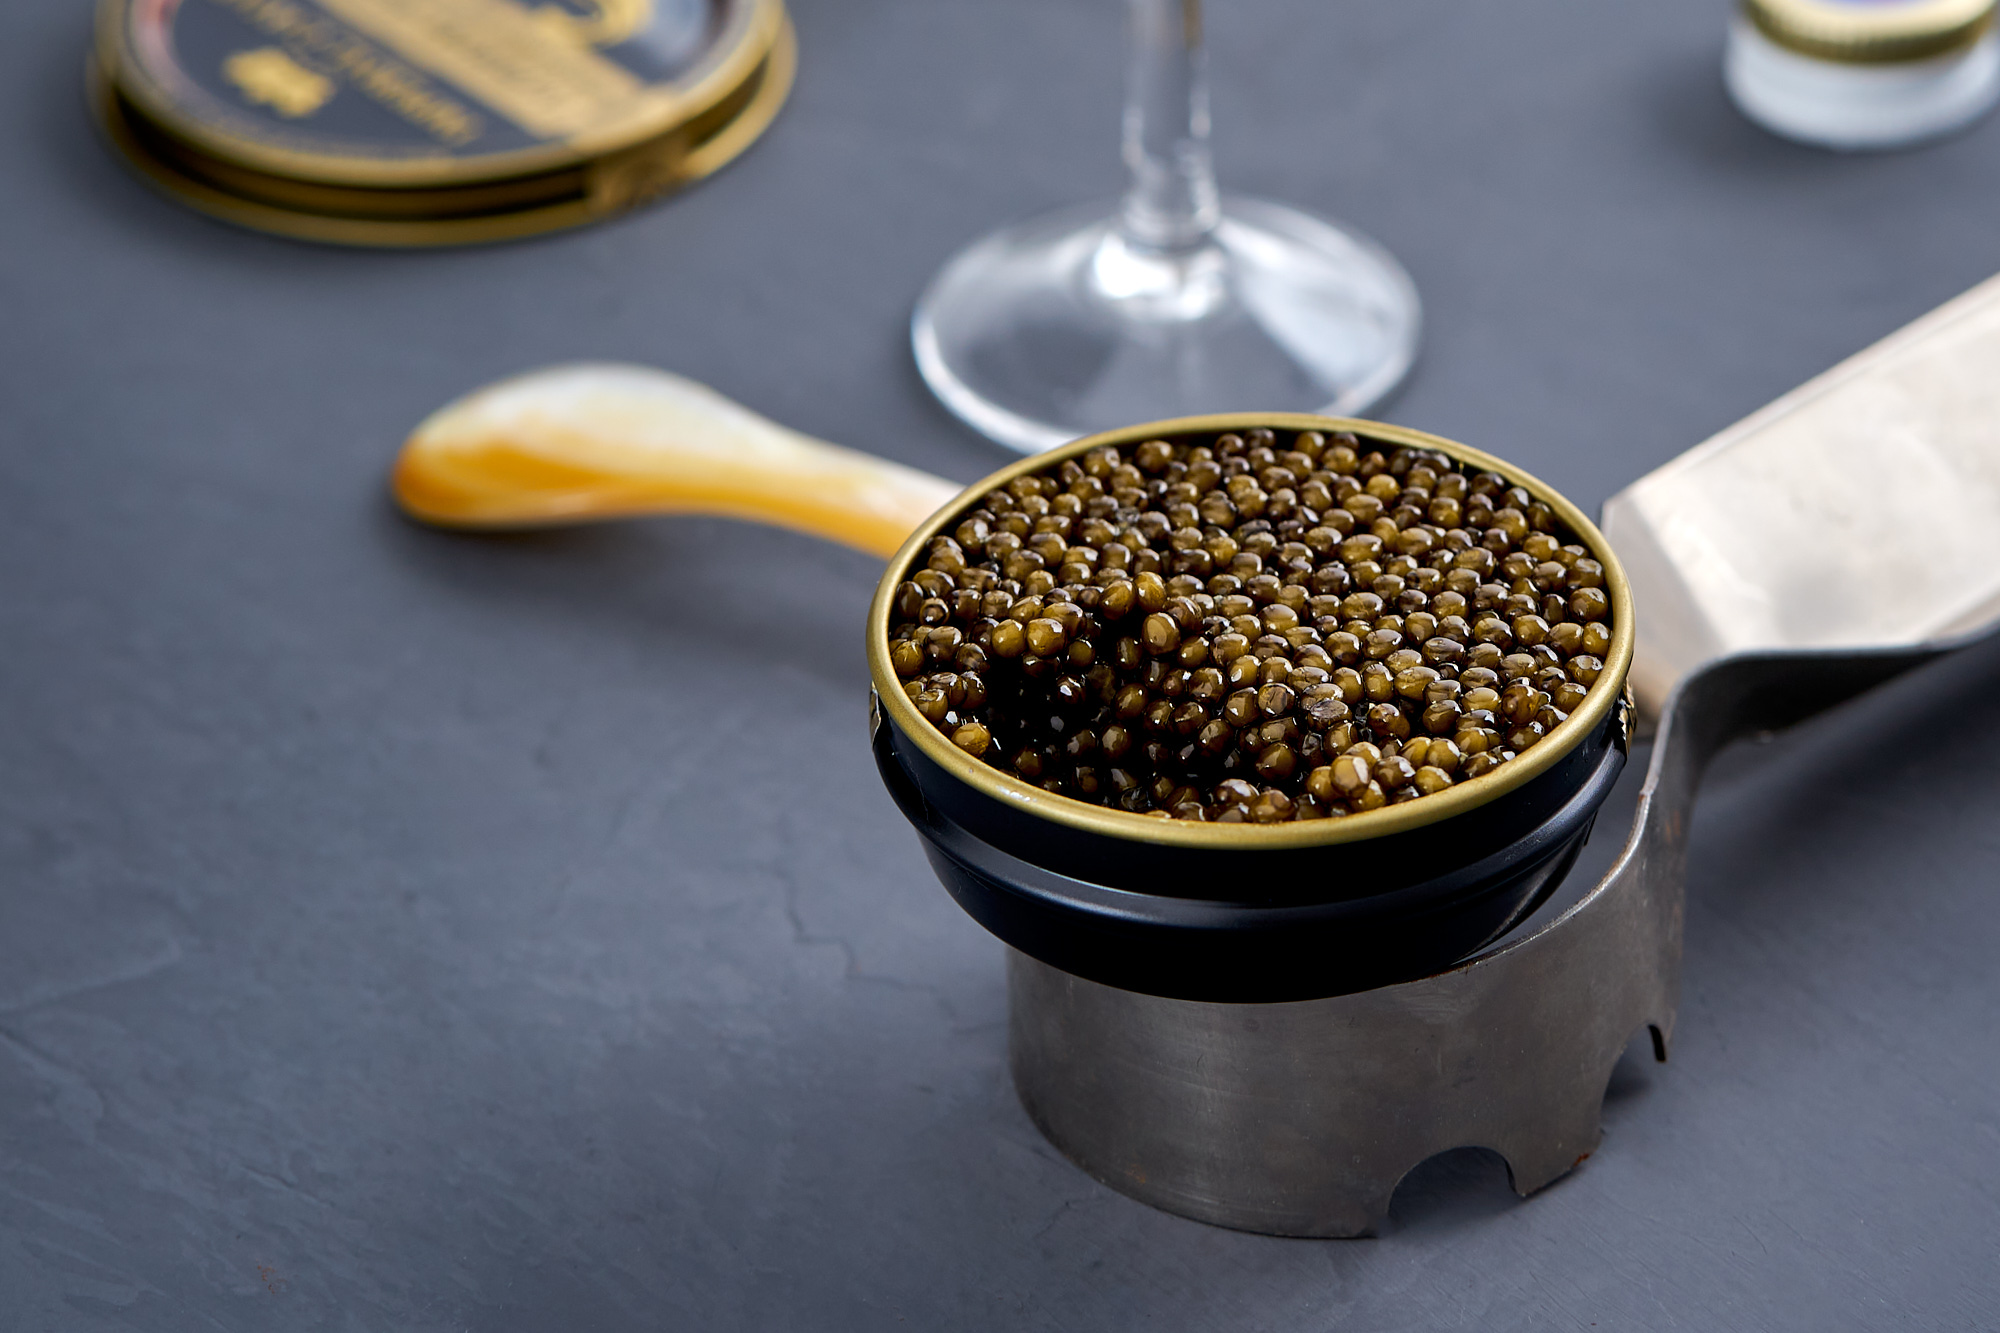 Imperial Caviar Auslese